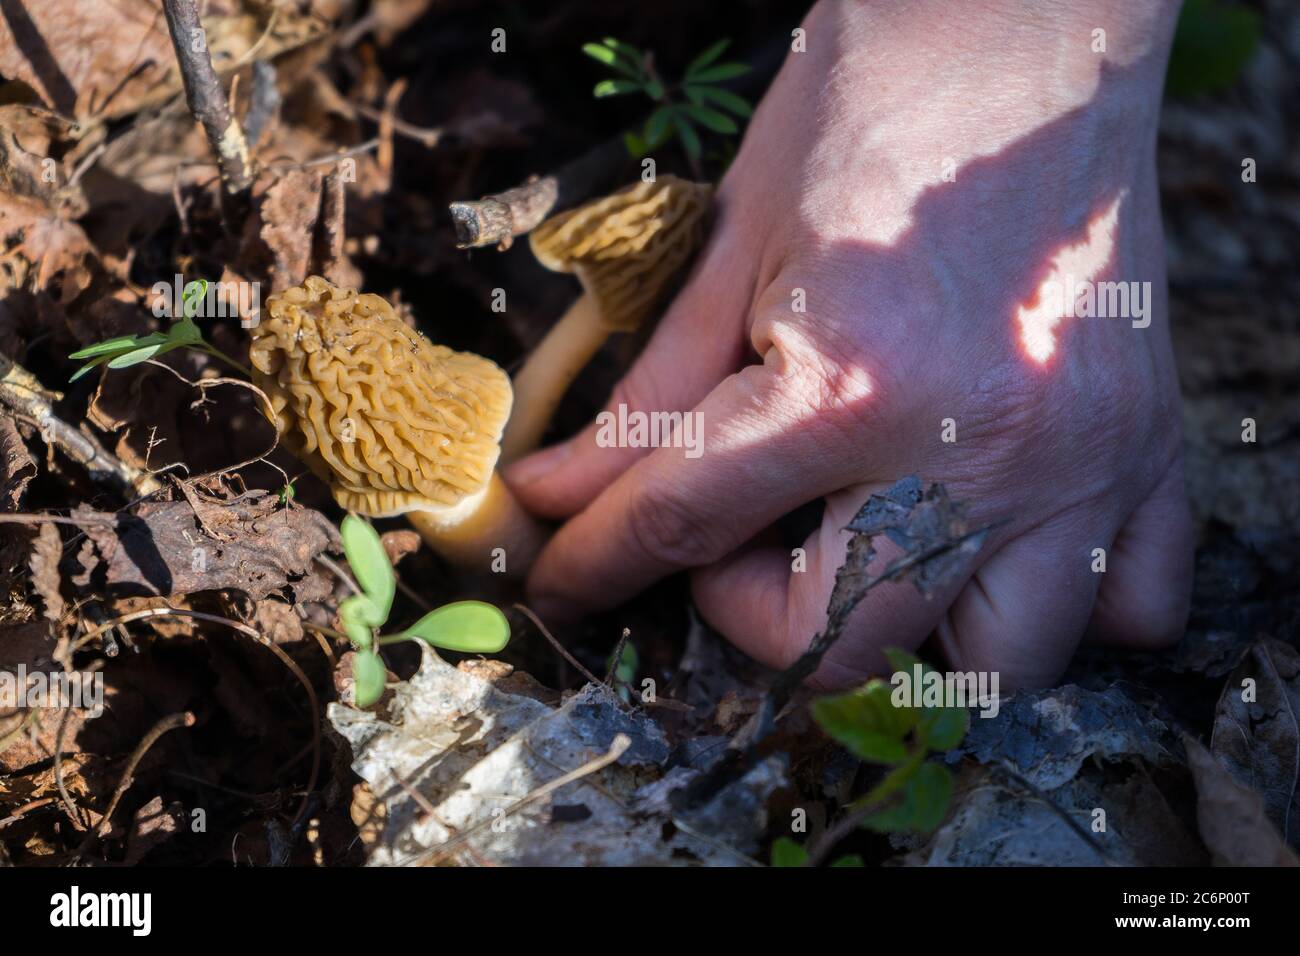 Morchella mushroom in the hand. Assortment of morel mushrooms.  Stock Photo